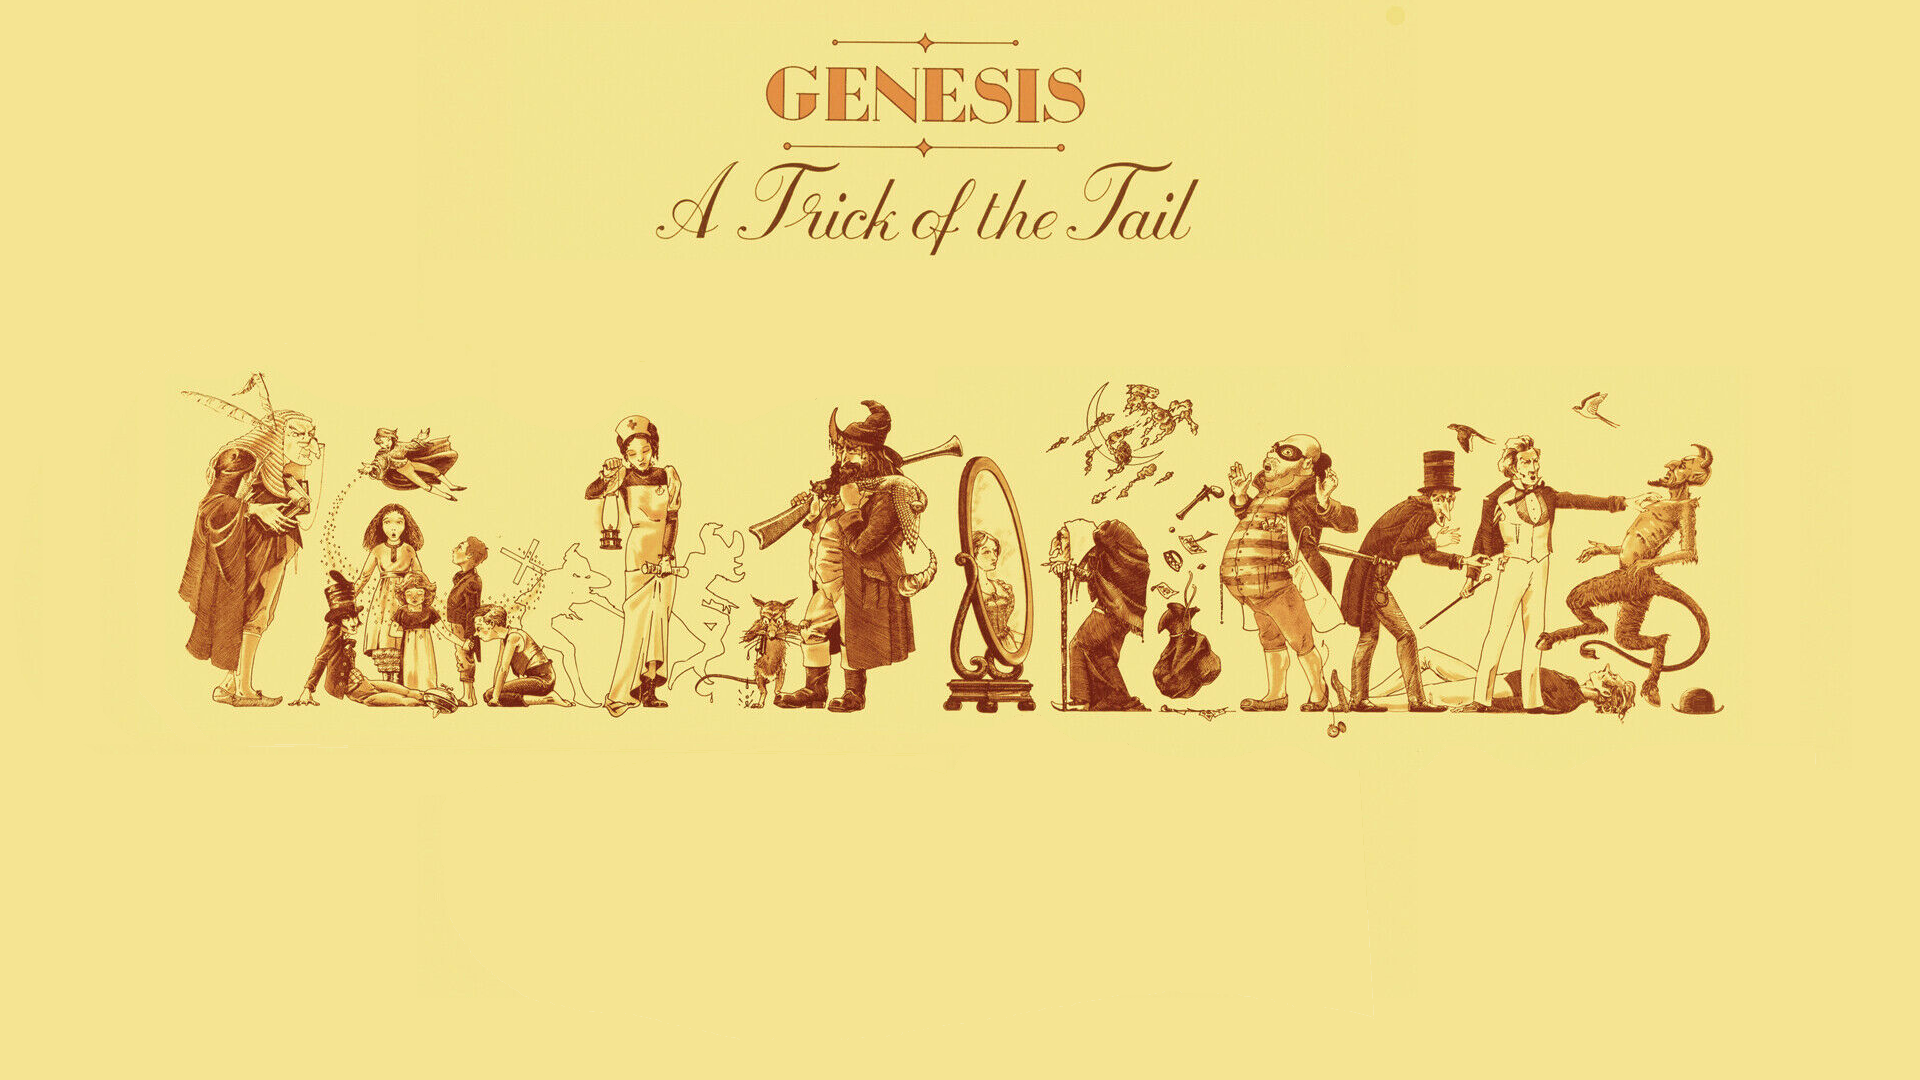 Genesis Band Album Covers Cover Art Progressive Rock Classic Rock 1970s 1976 Year Genesis Simple Bac 1920x1080